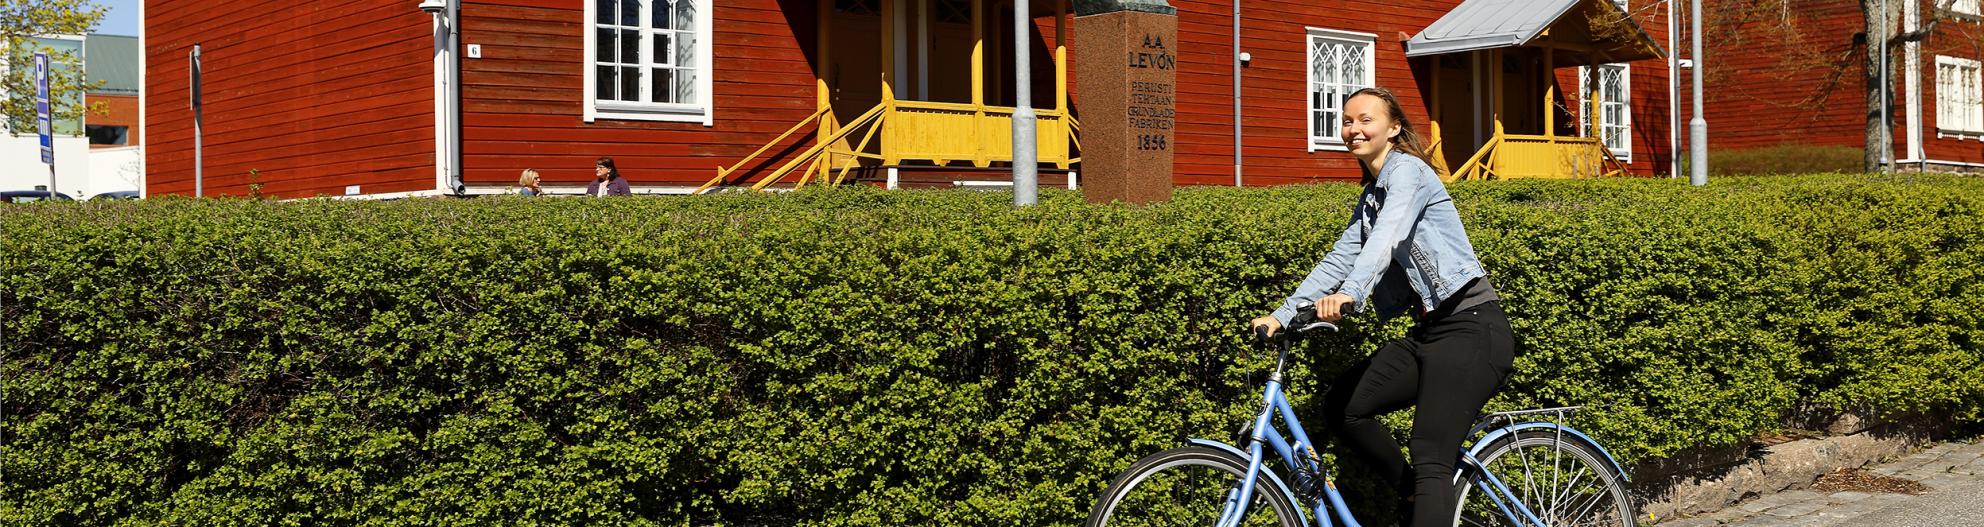 A young woman riding a bicycle at the University of Vaasa campus